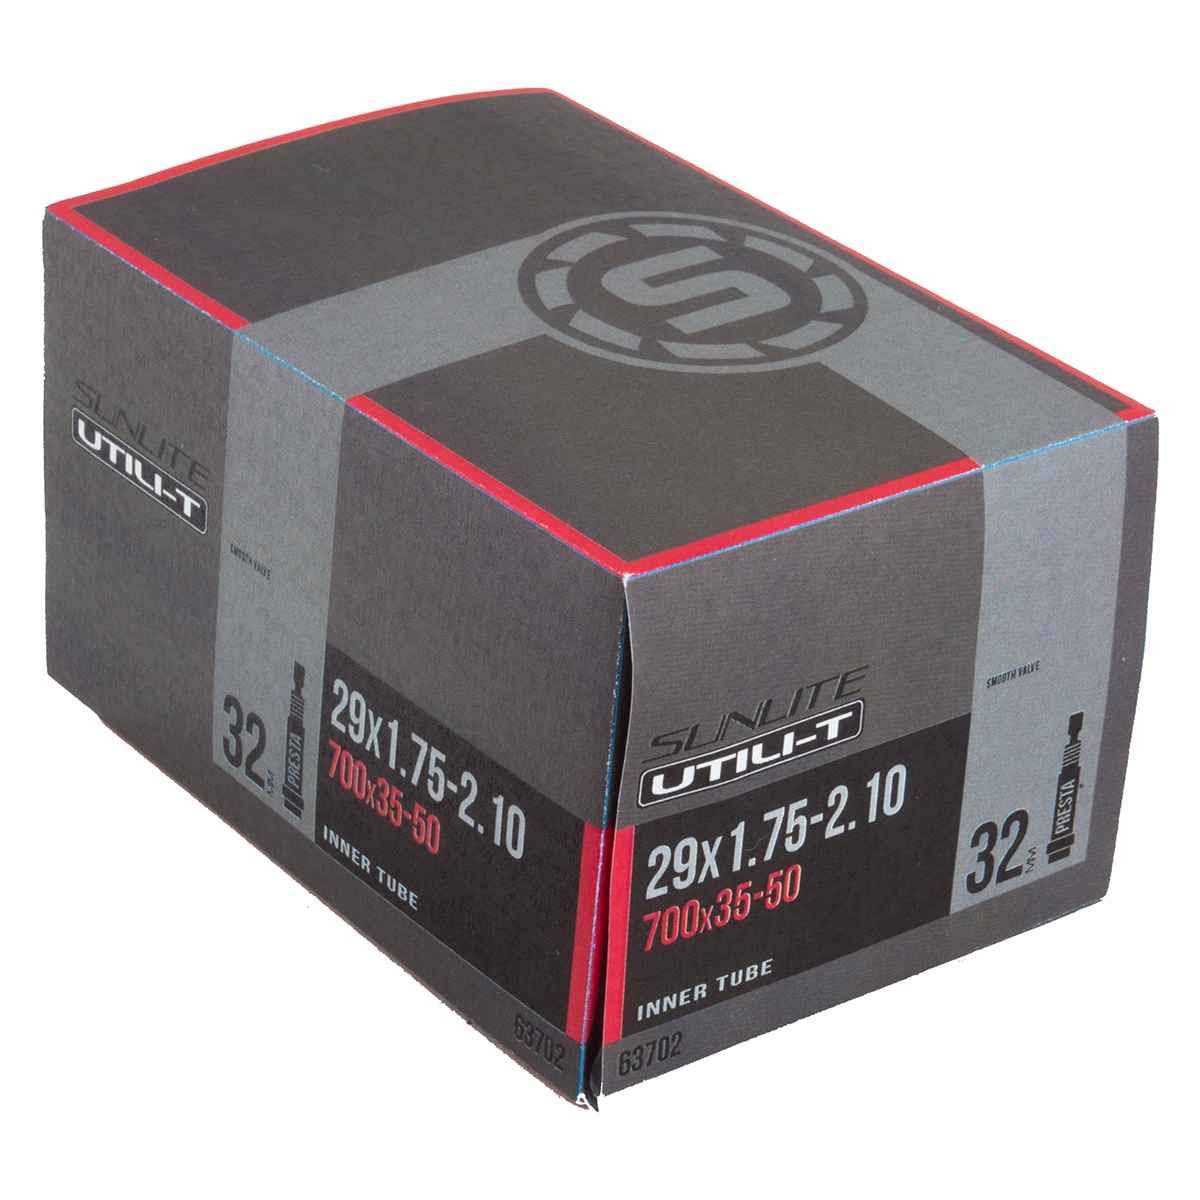 Sunlite Utili-t Standard Presta Valve Tubes - 29" x 1.75" to 2.10", 32mm